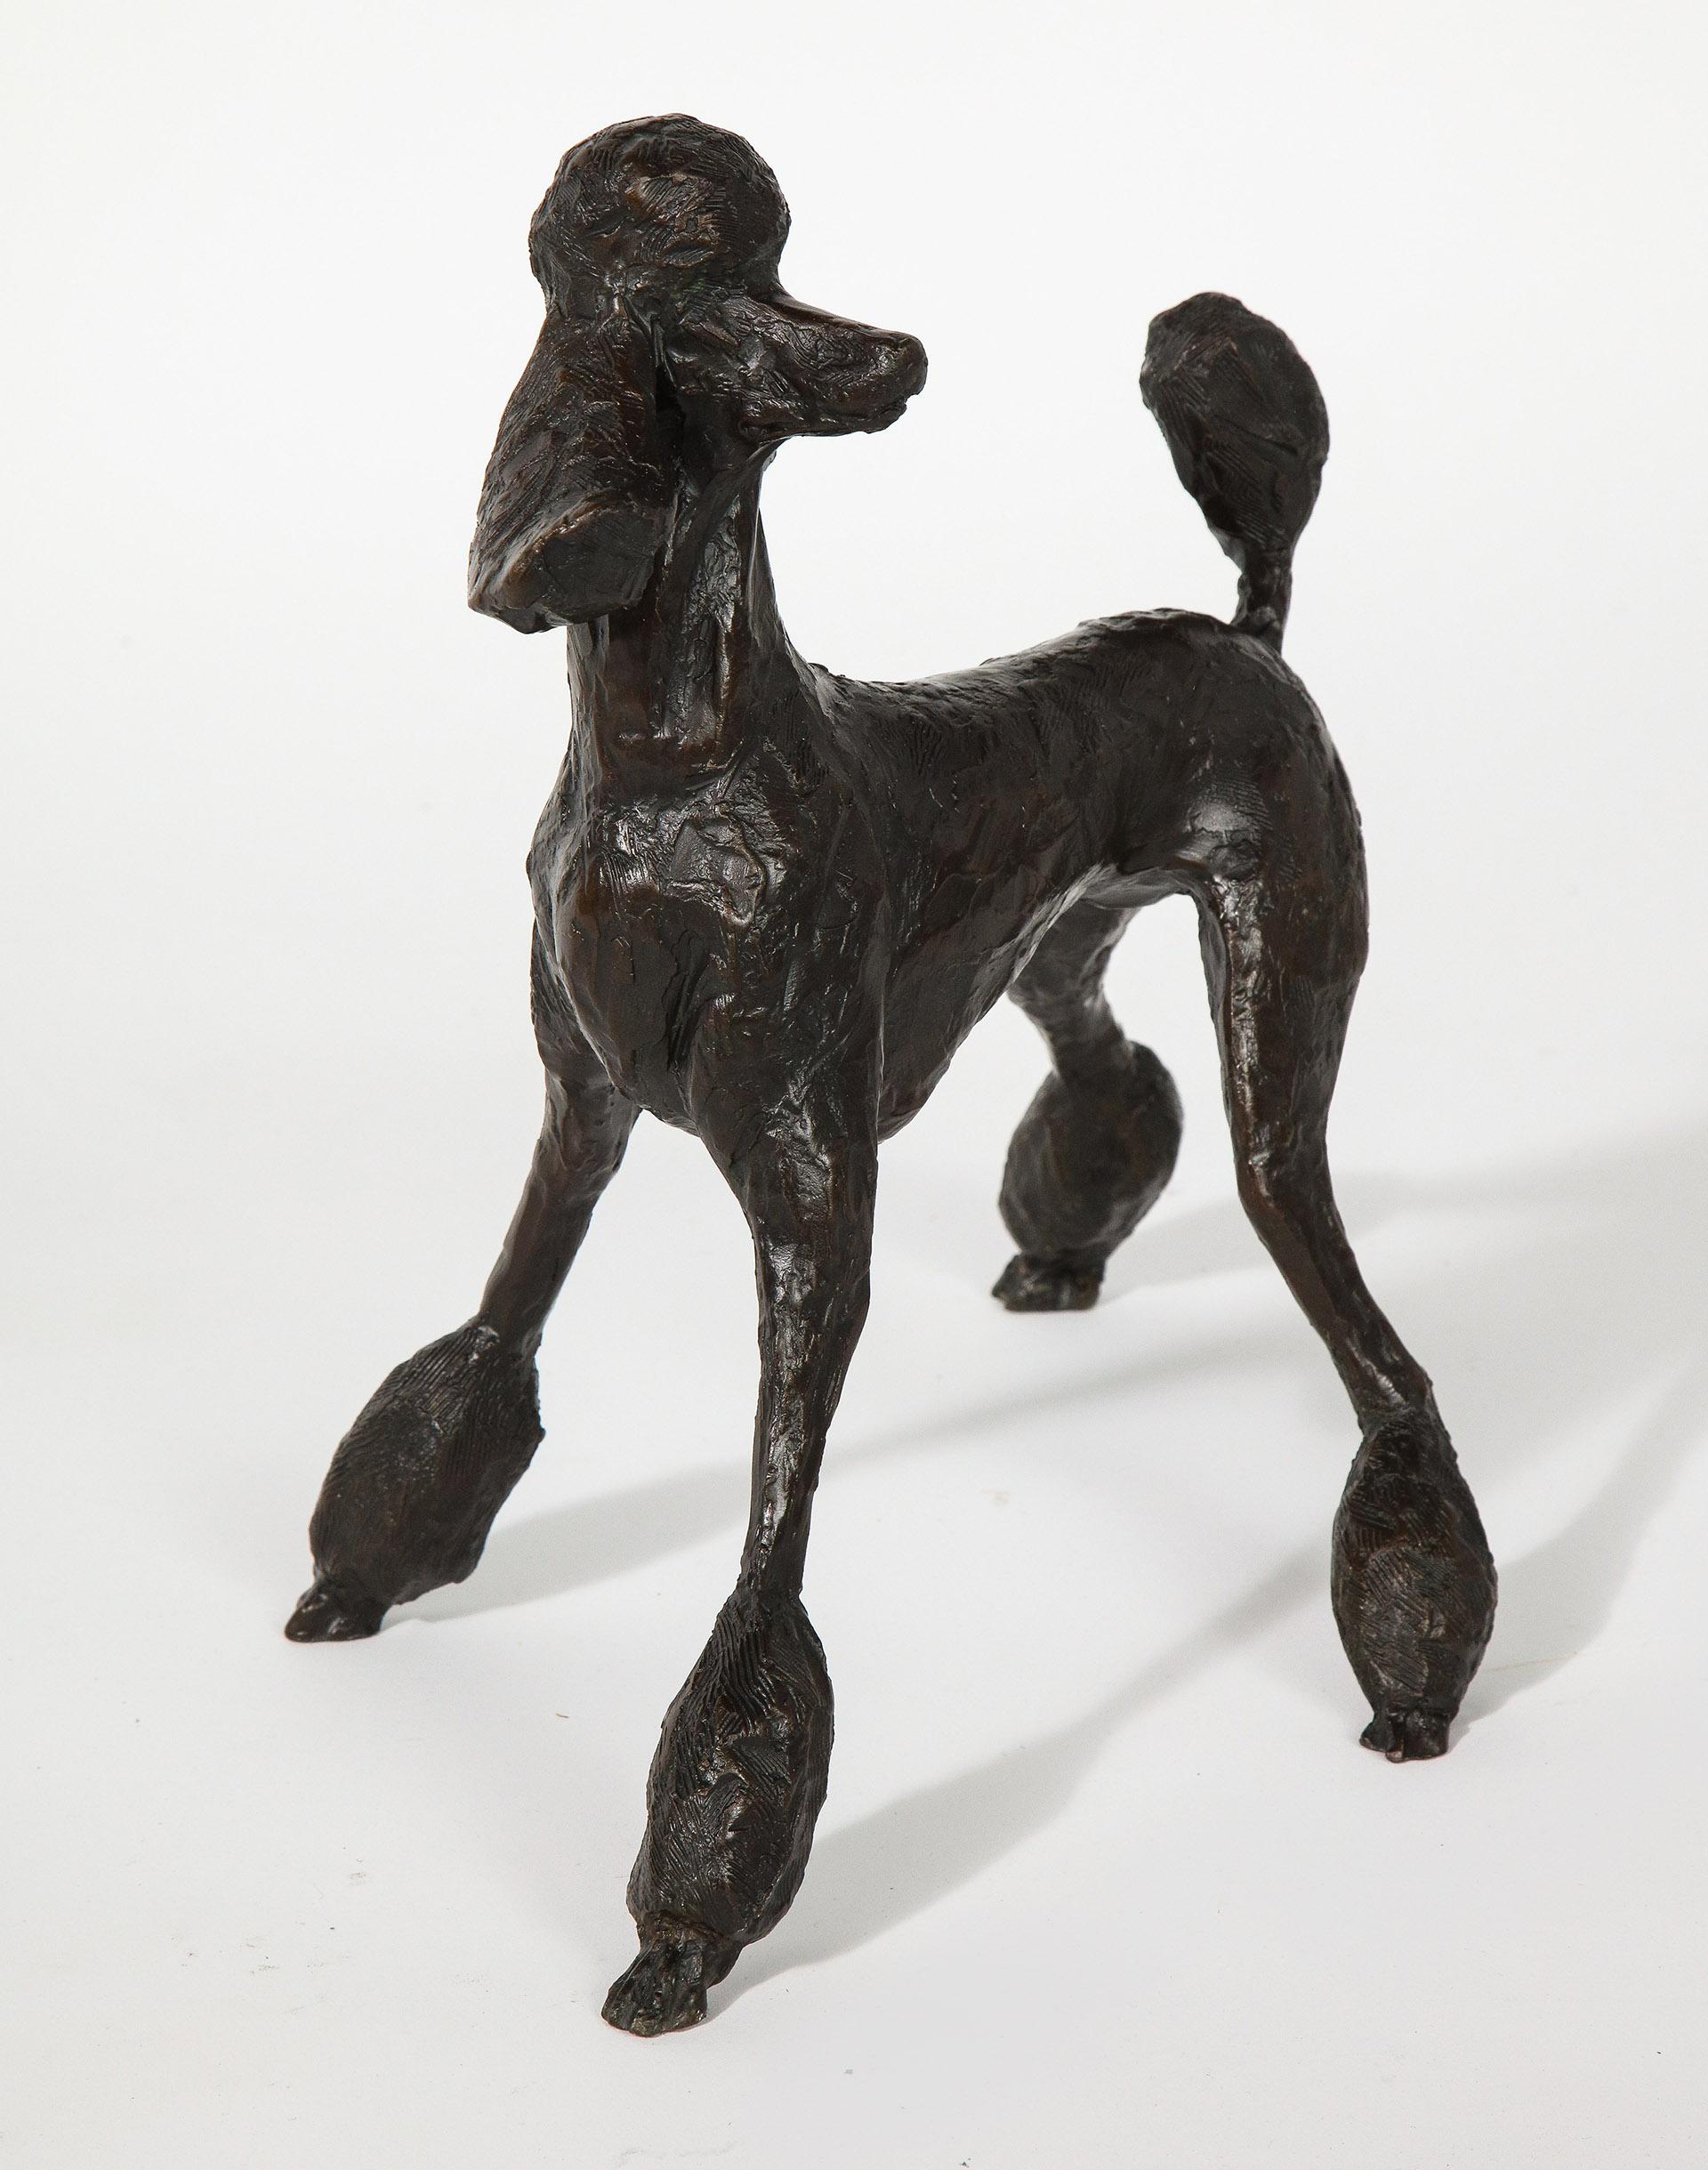 The cast bronze poodle titled 